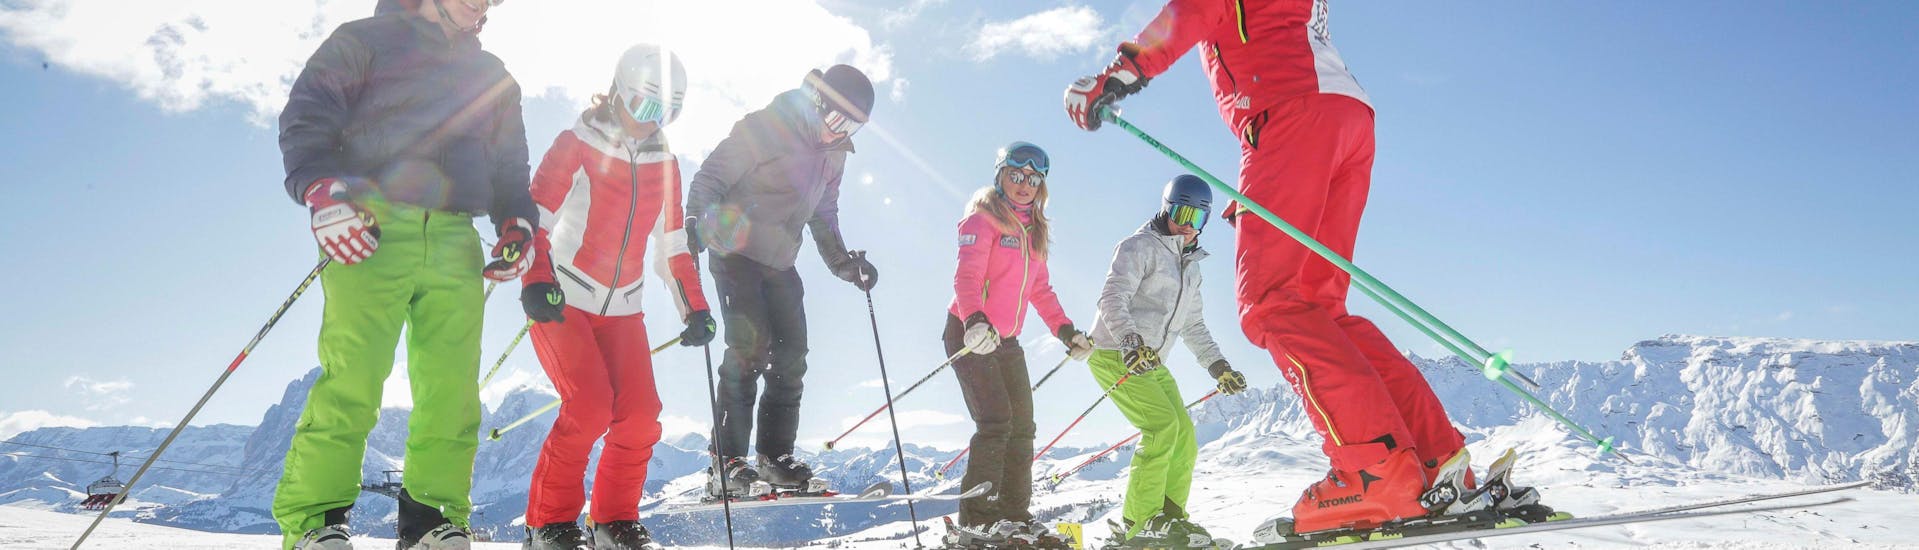 A group of people enjoying a day skiing with Scuola di Sci Alpe di Siusi.